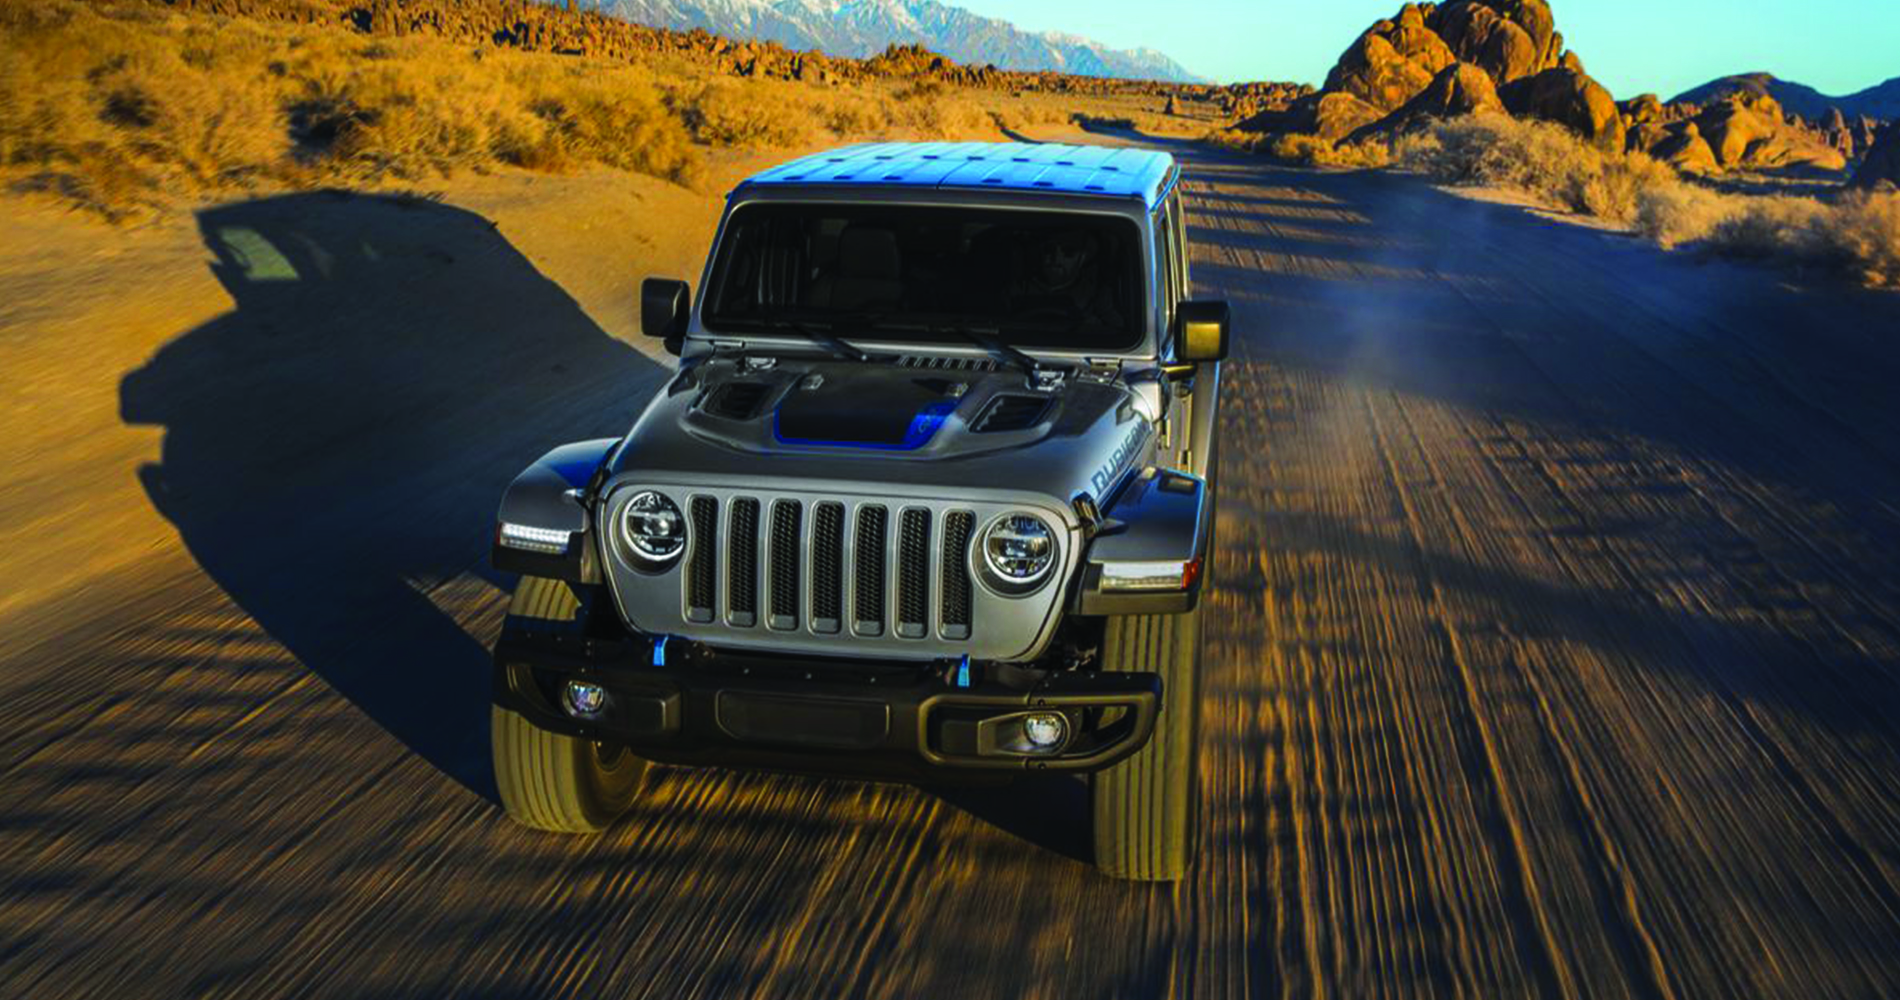 2021 gray Jeep Rubicon in the desert